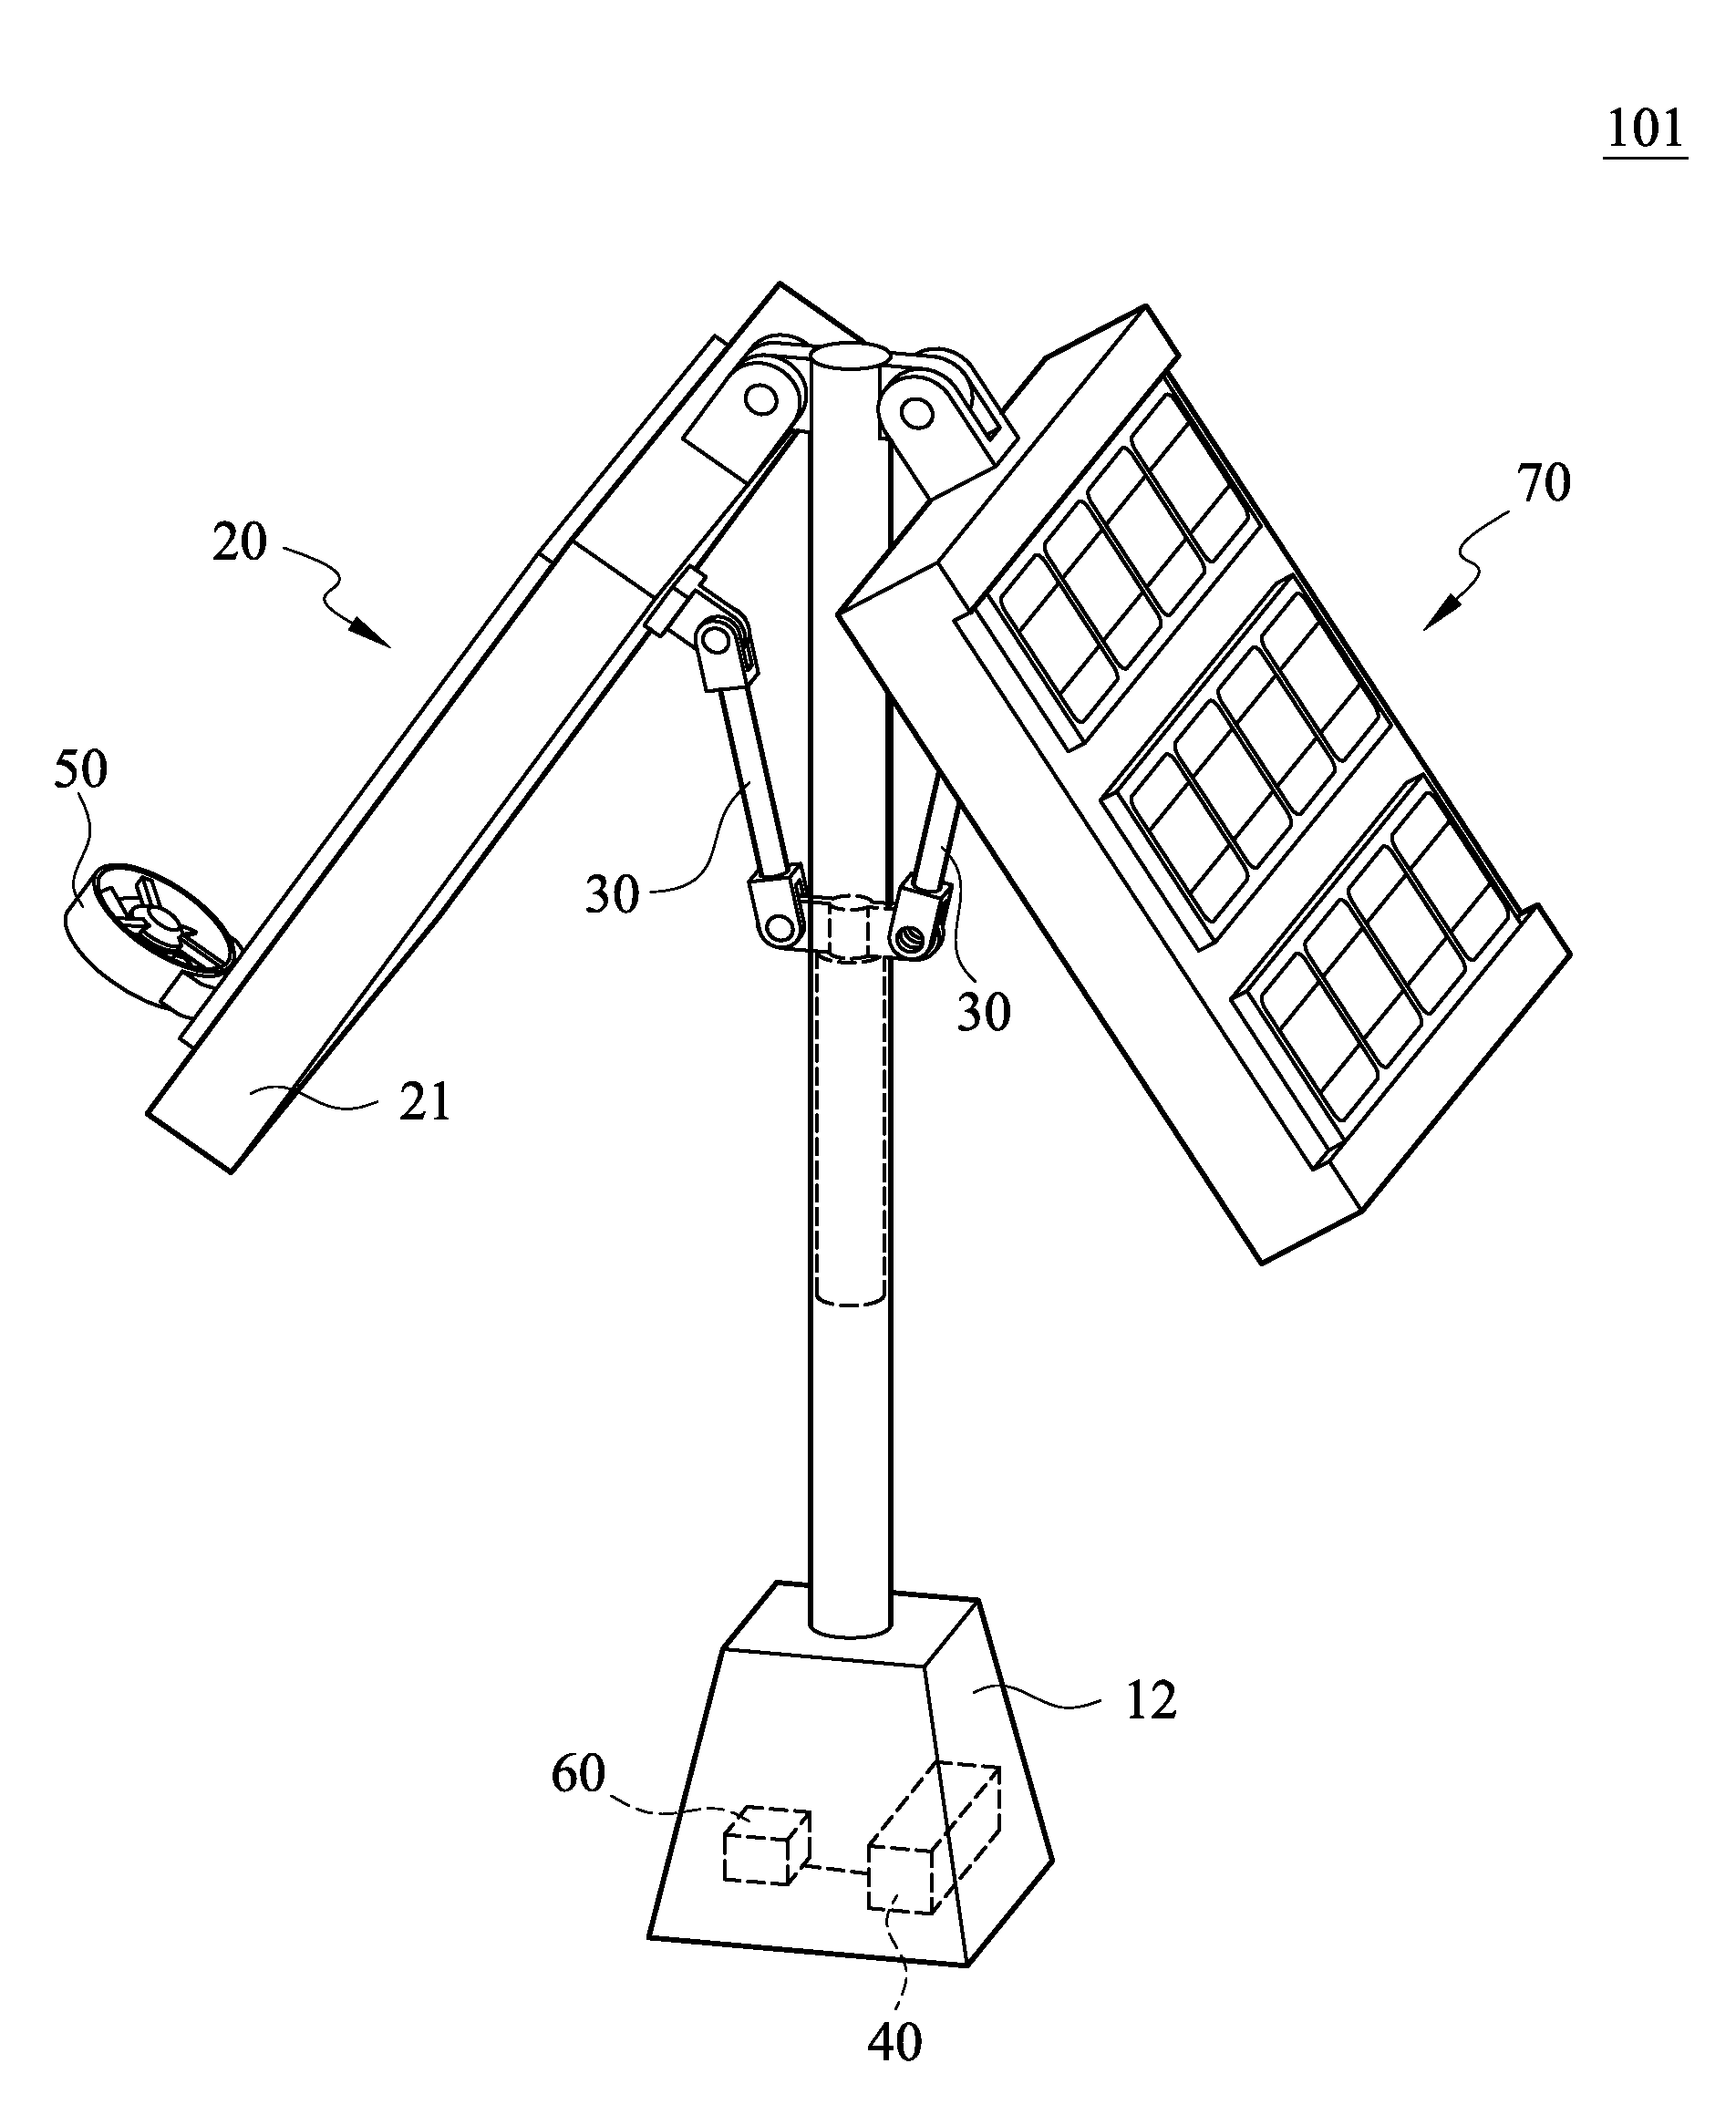 Foldable solar energy apparatus